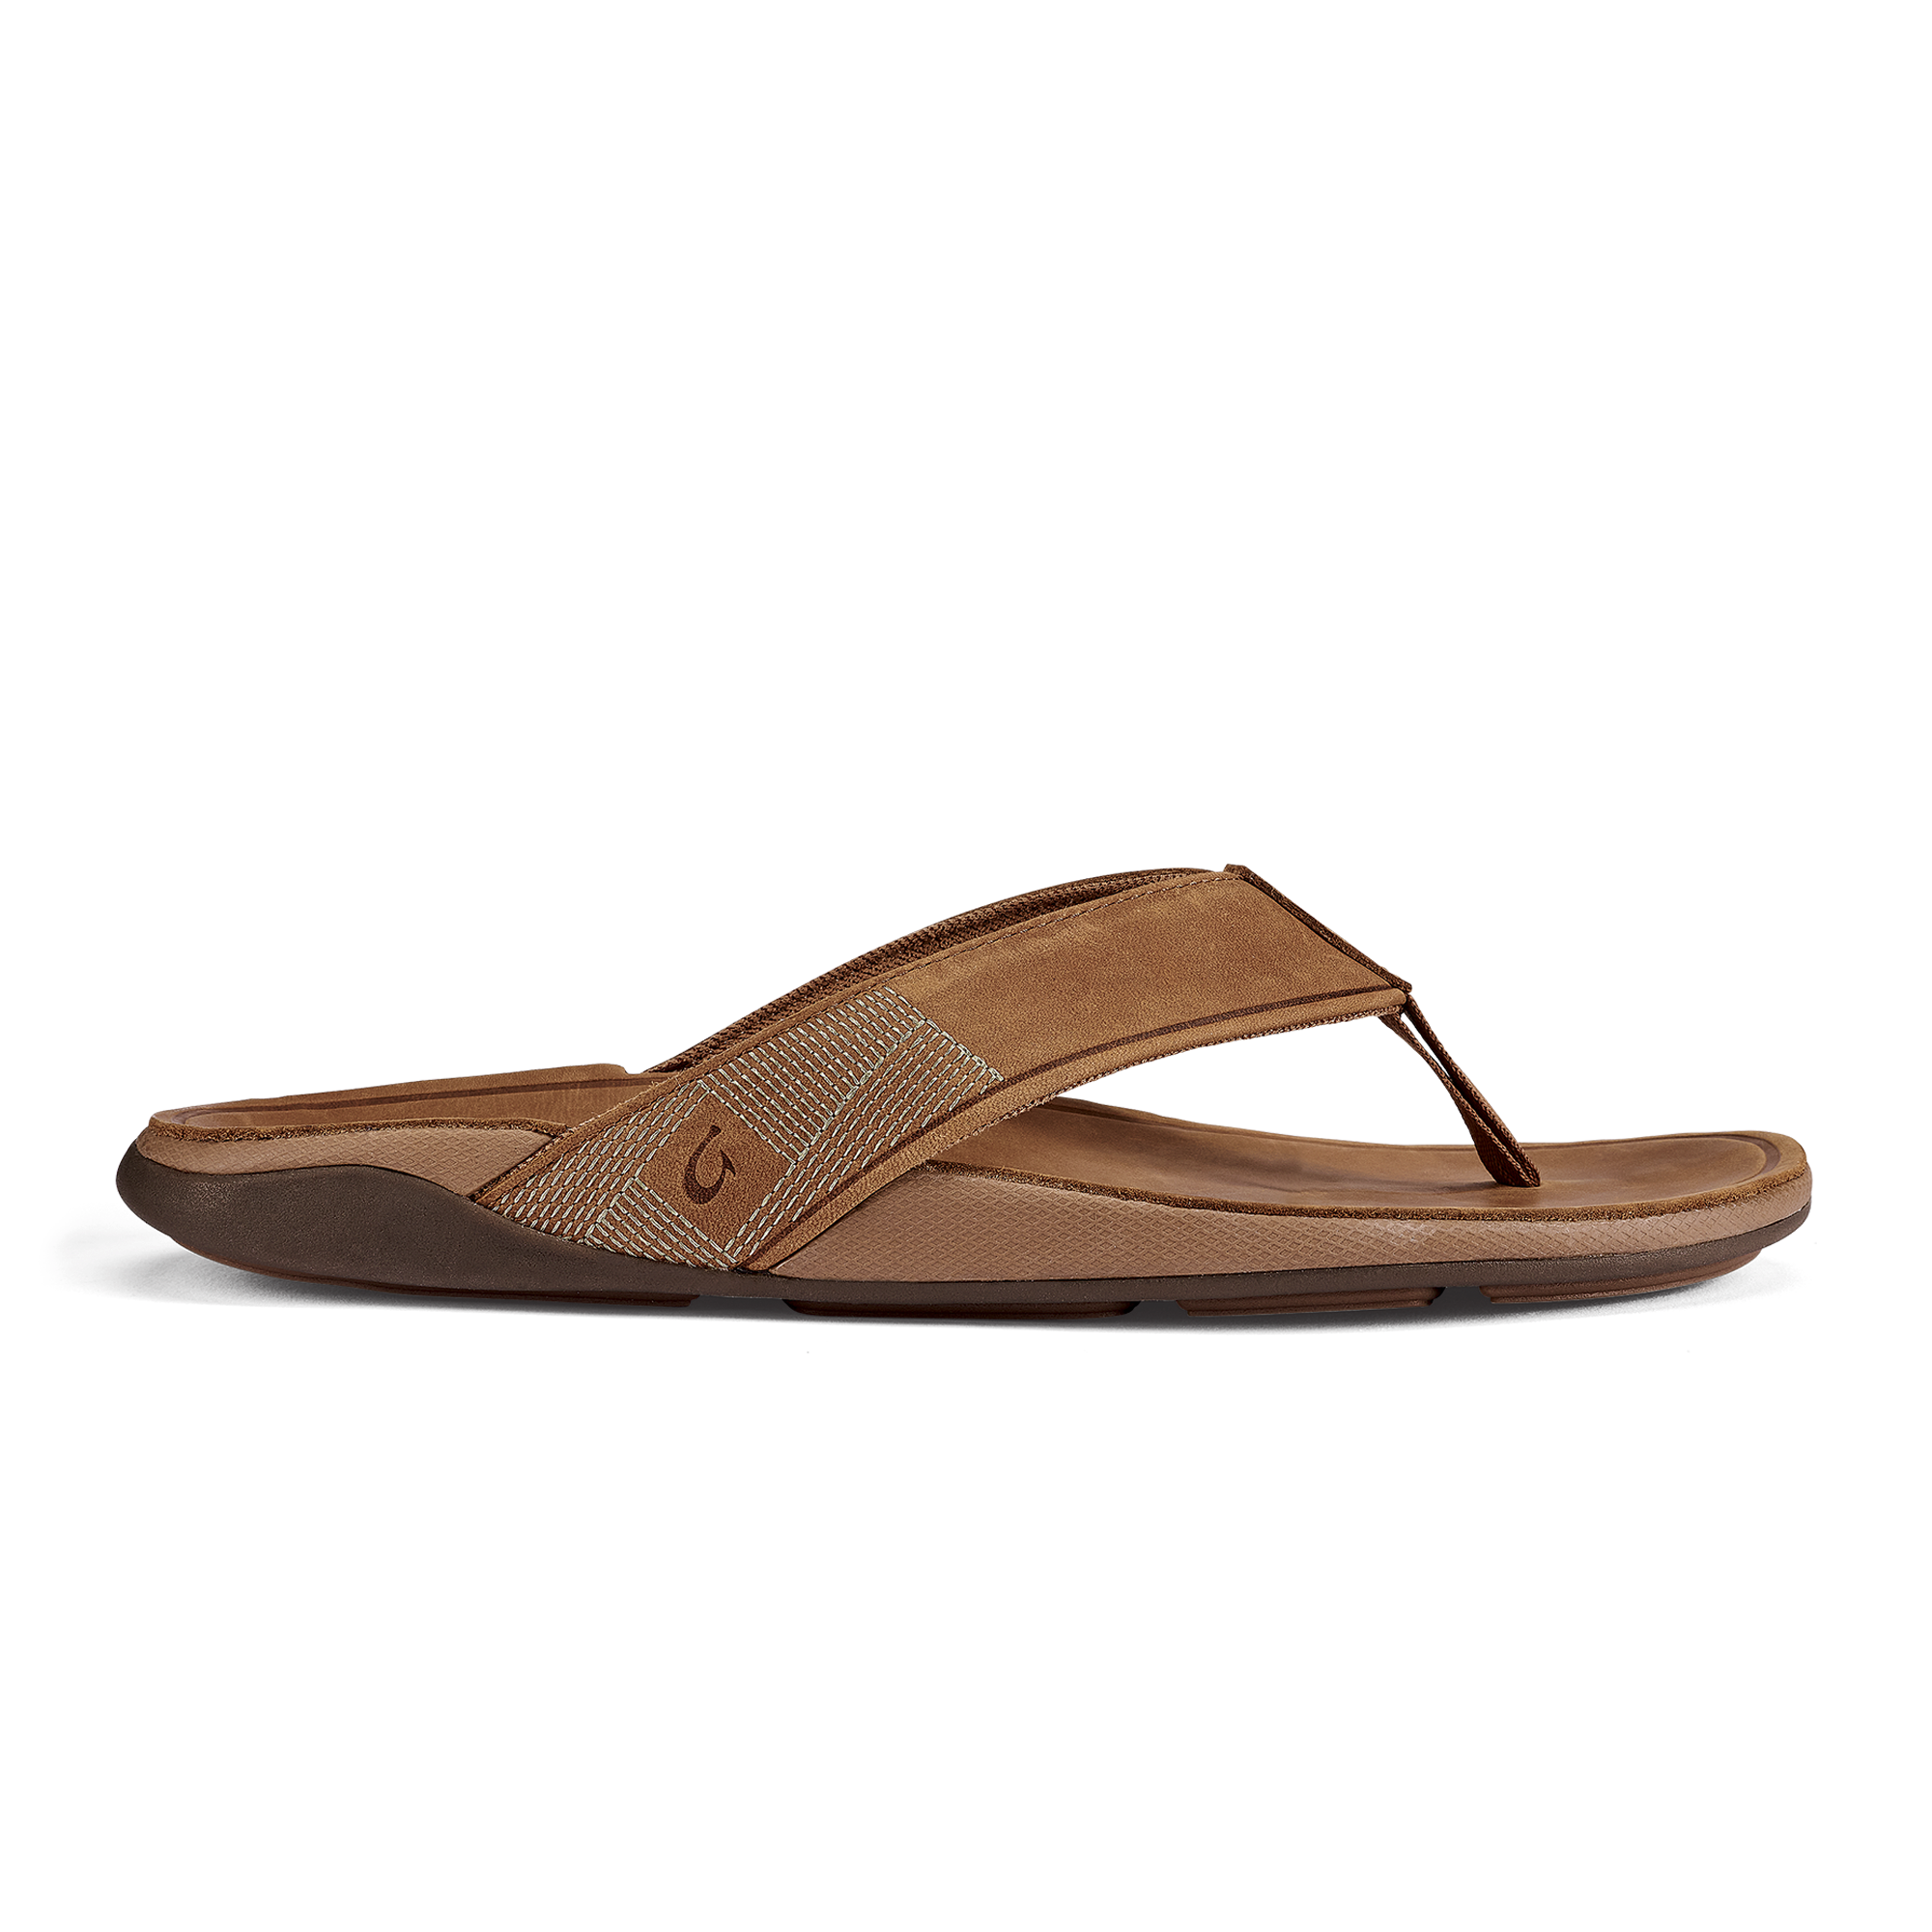  OLUKAI 'Aukai Women's Beach Sandals, Soft Leather Flip-Flop  Slides with Non Marking Outsoles, Lightweight & All-Day Comfort, Dk Java/Dk  Java, 5